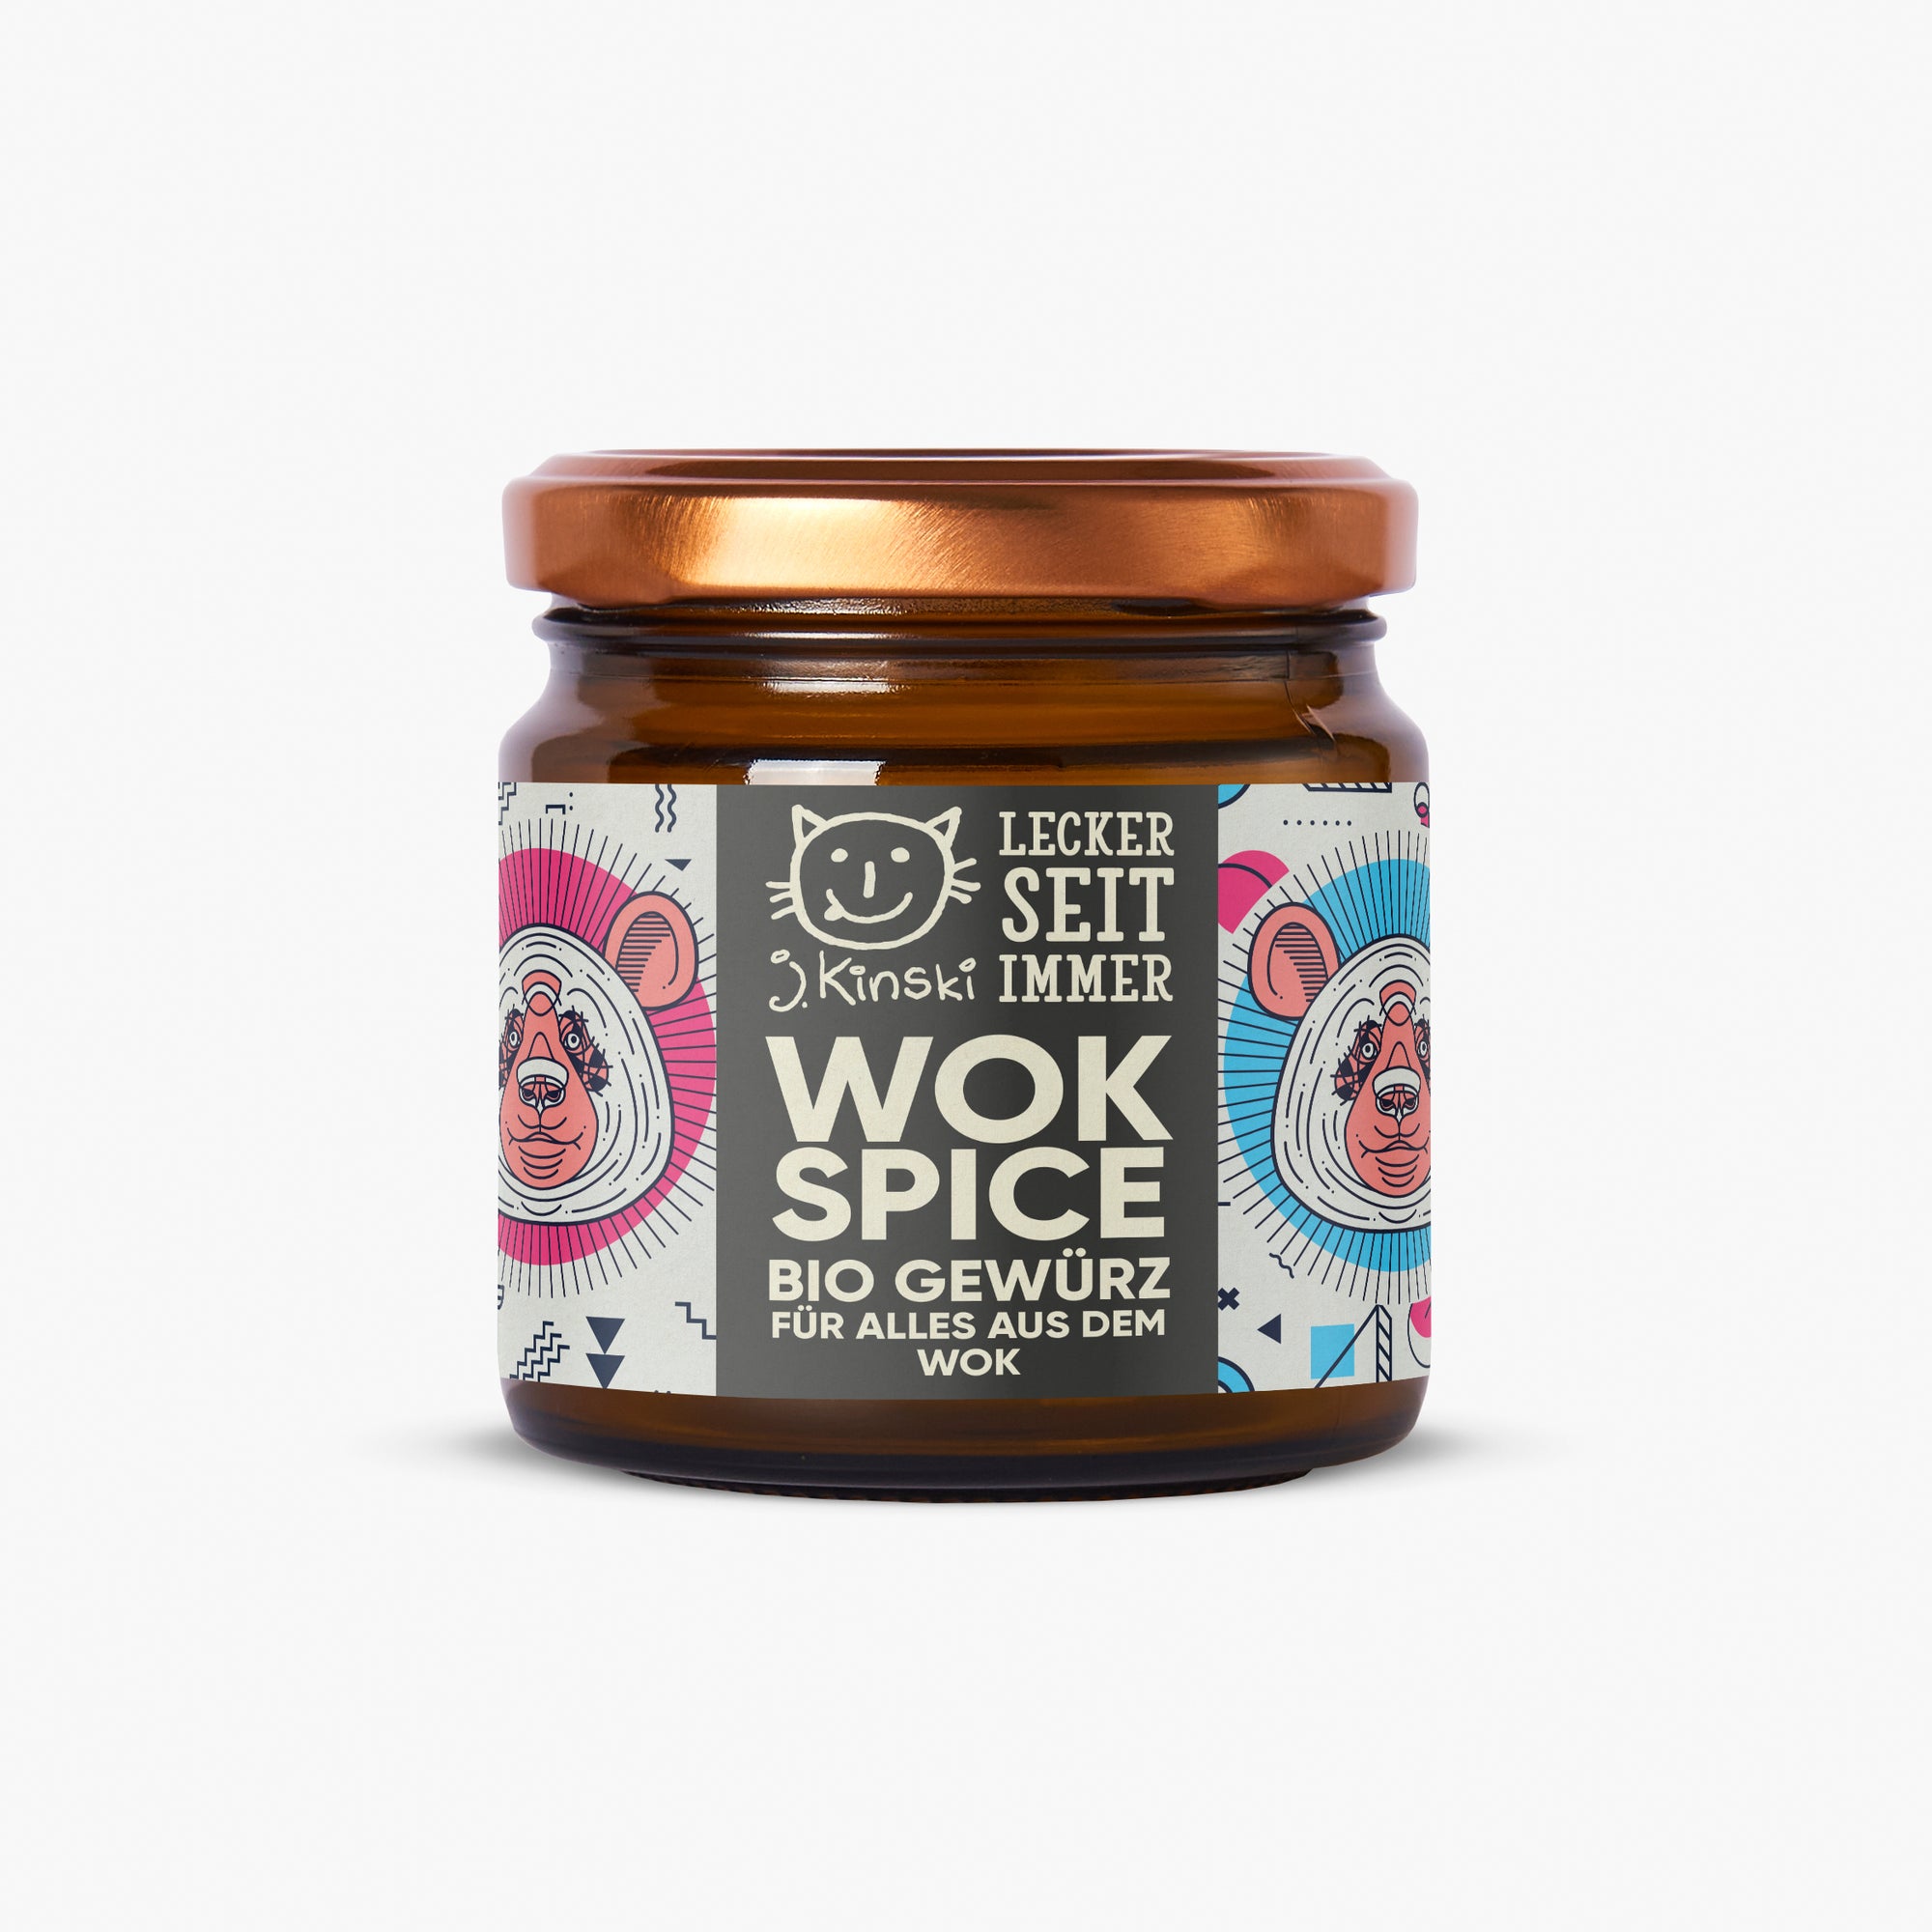 Wok Spice organic spice mix